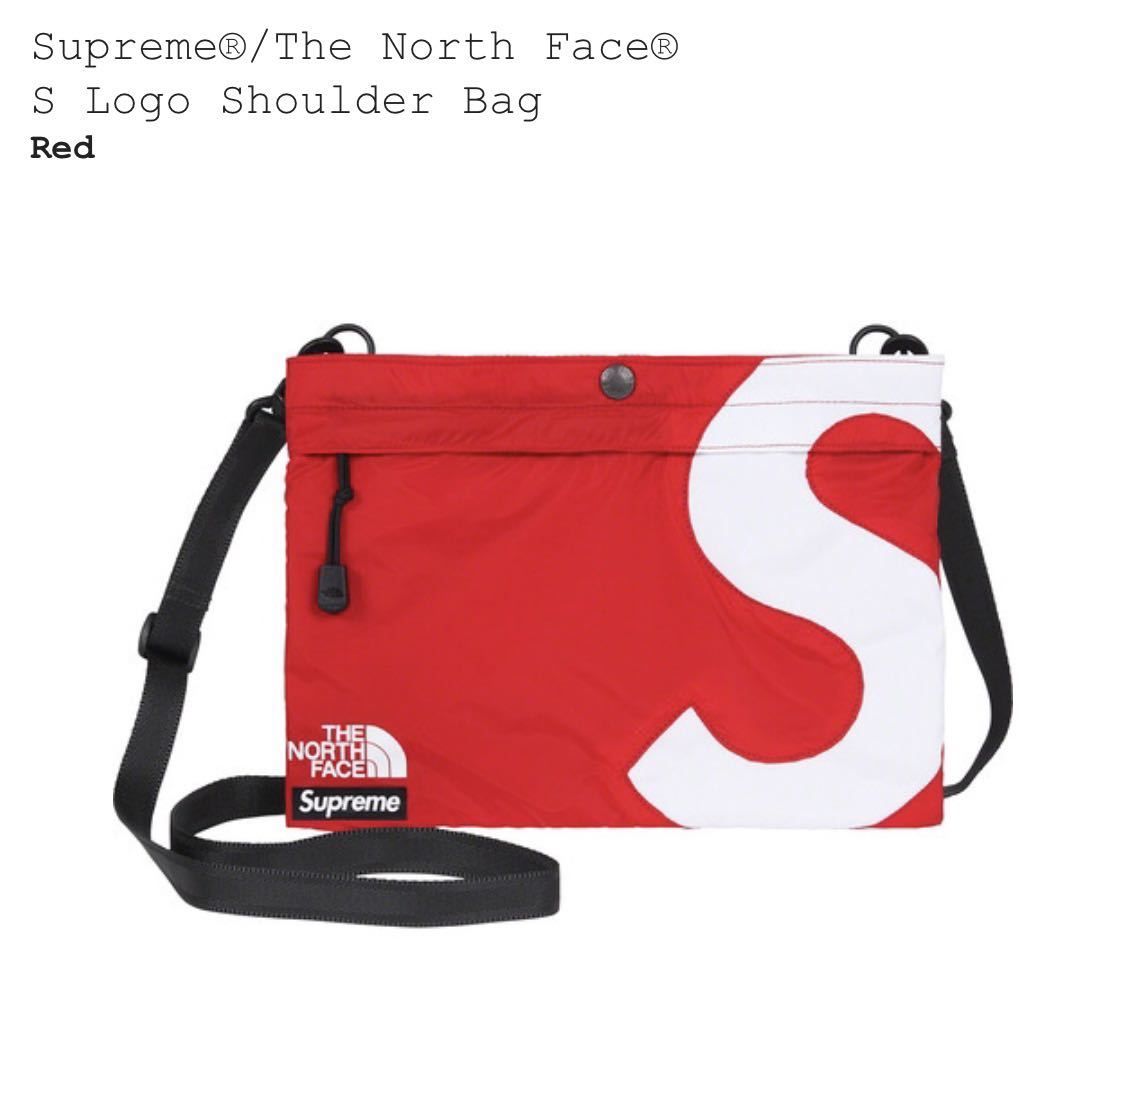 SUPREME x TNF S Logo Shoulder Bag シュプリーム ノースフェイス Sロゴショルダーバッグ 20AW FW カラー Red 赤 レッド 新品